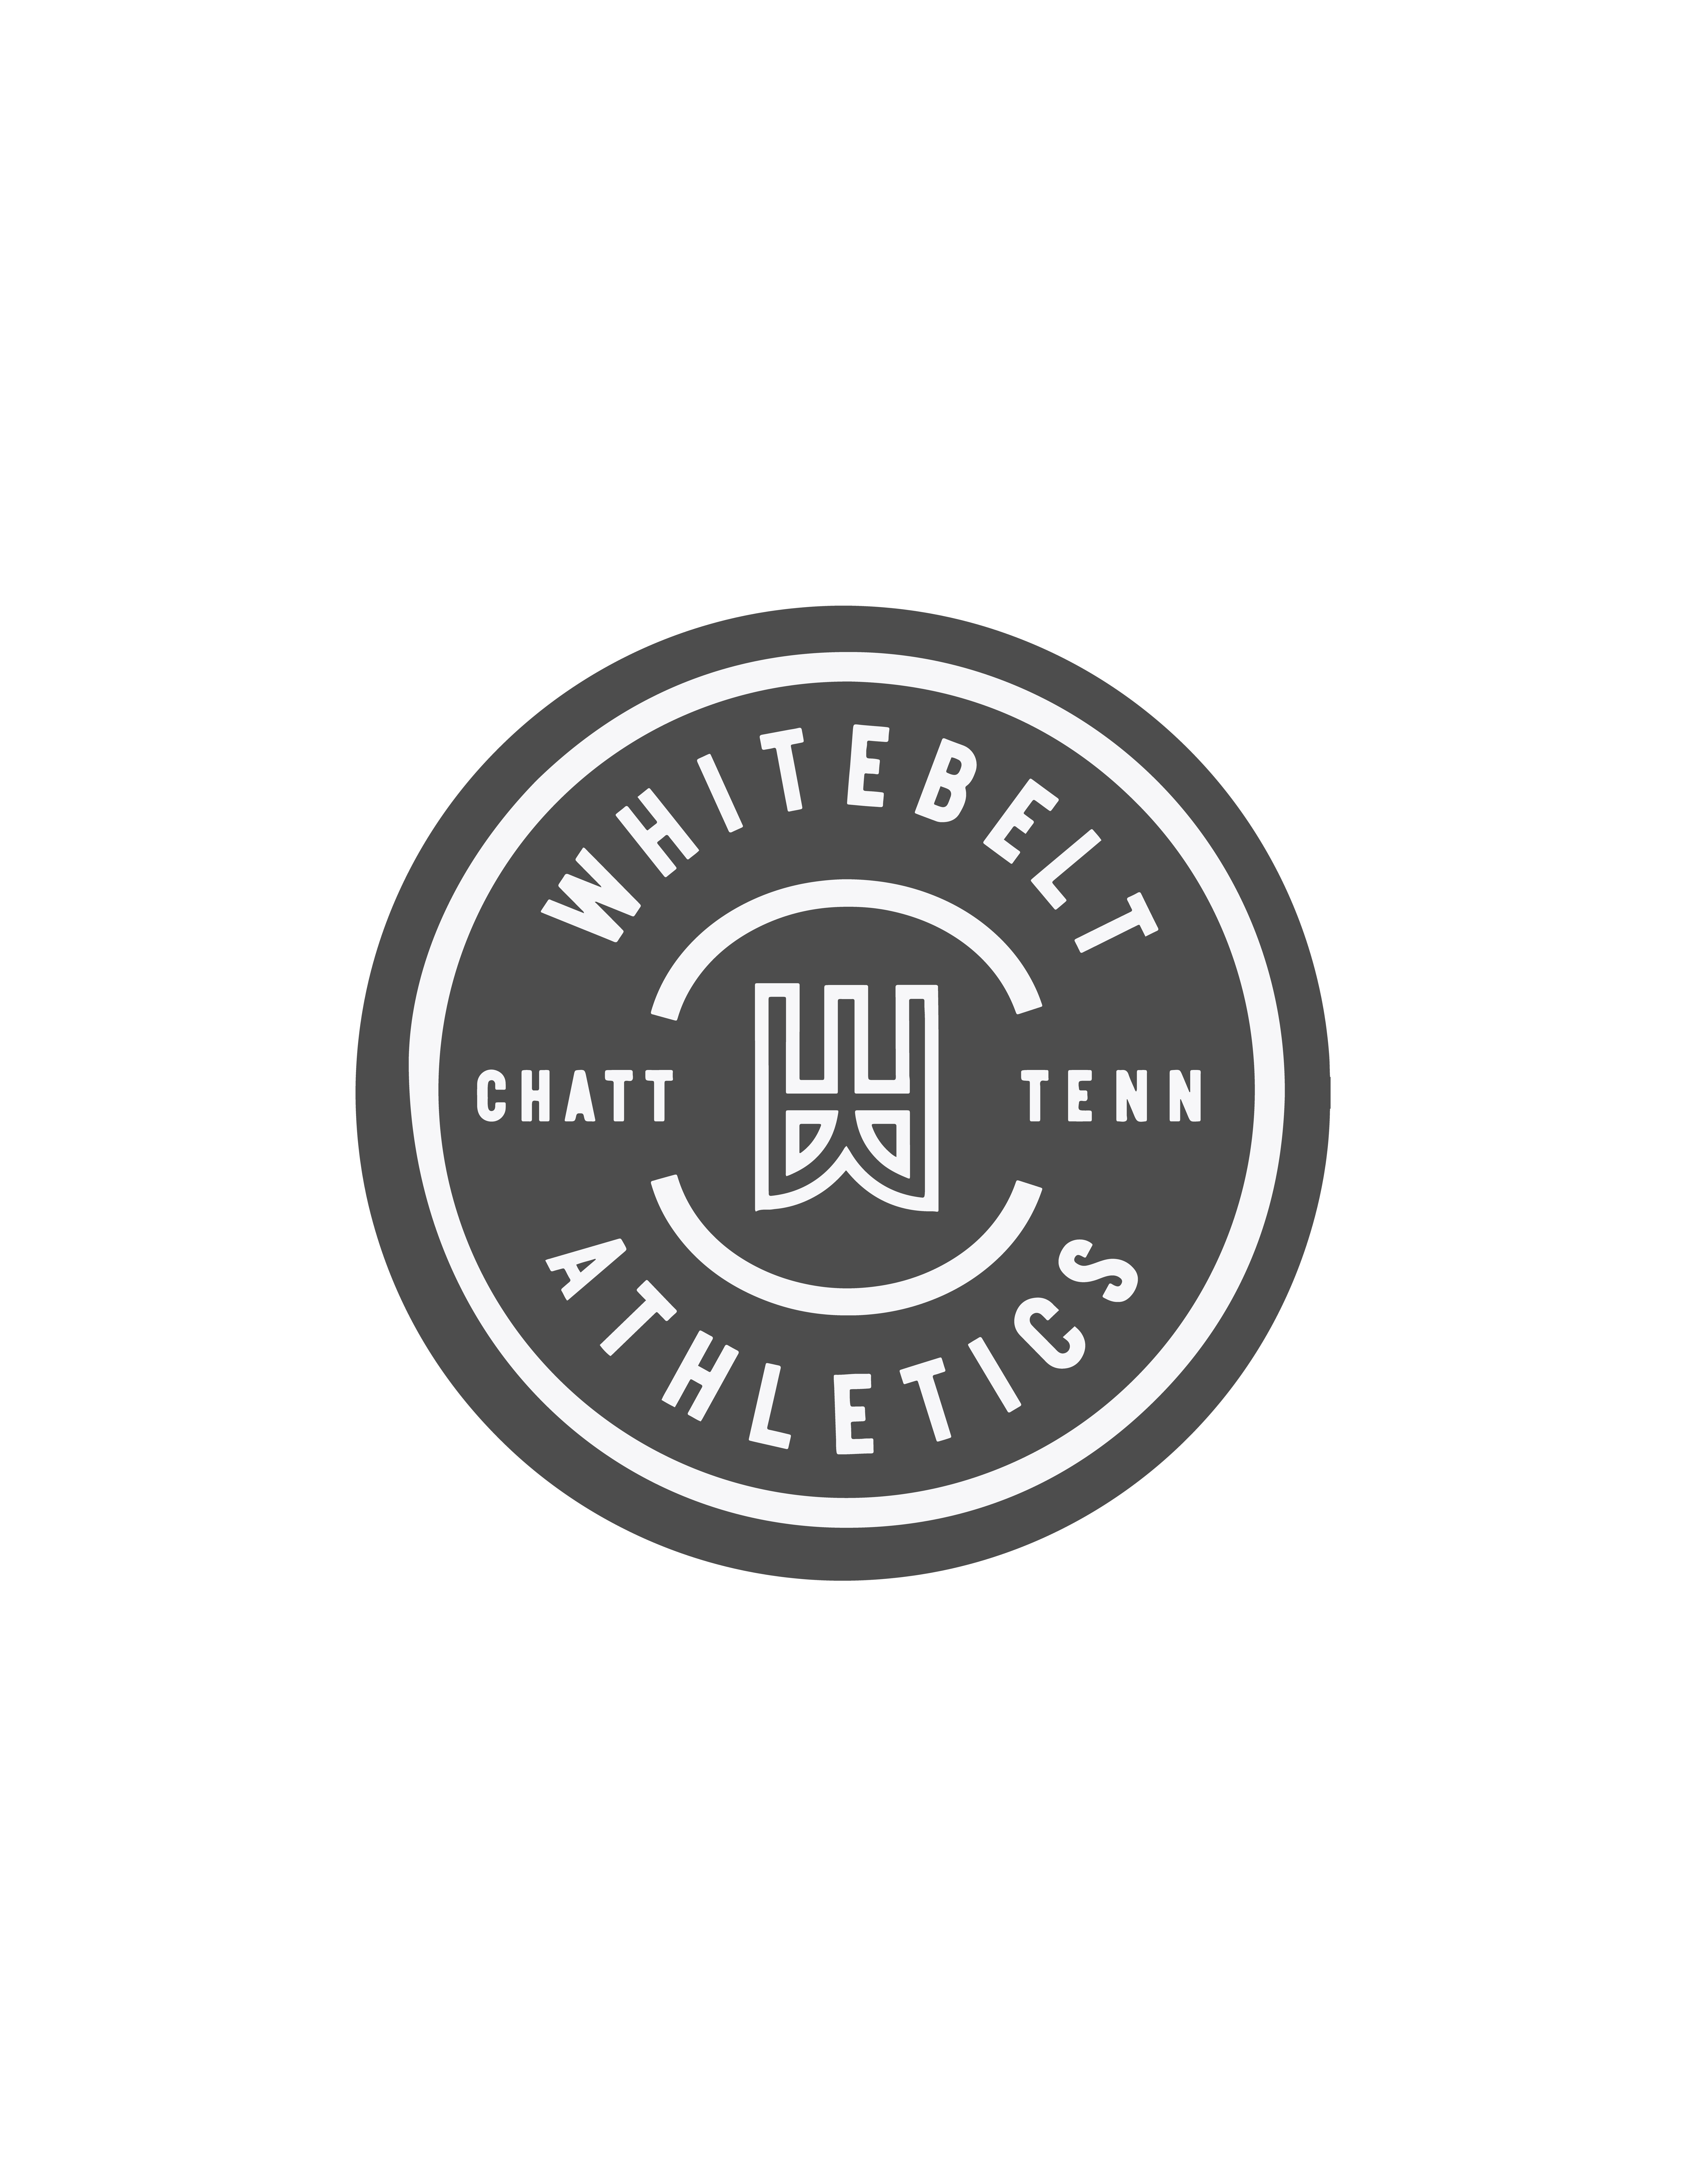 Whitebelt Athletics logo